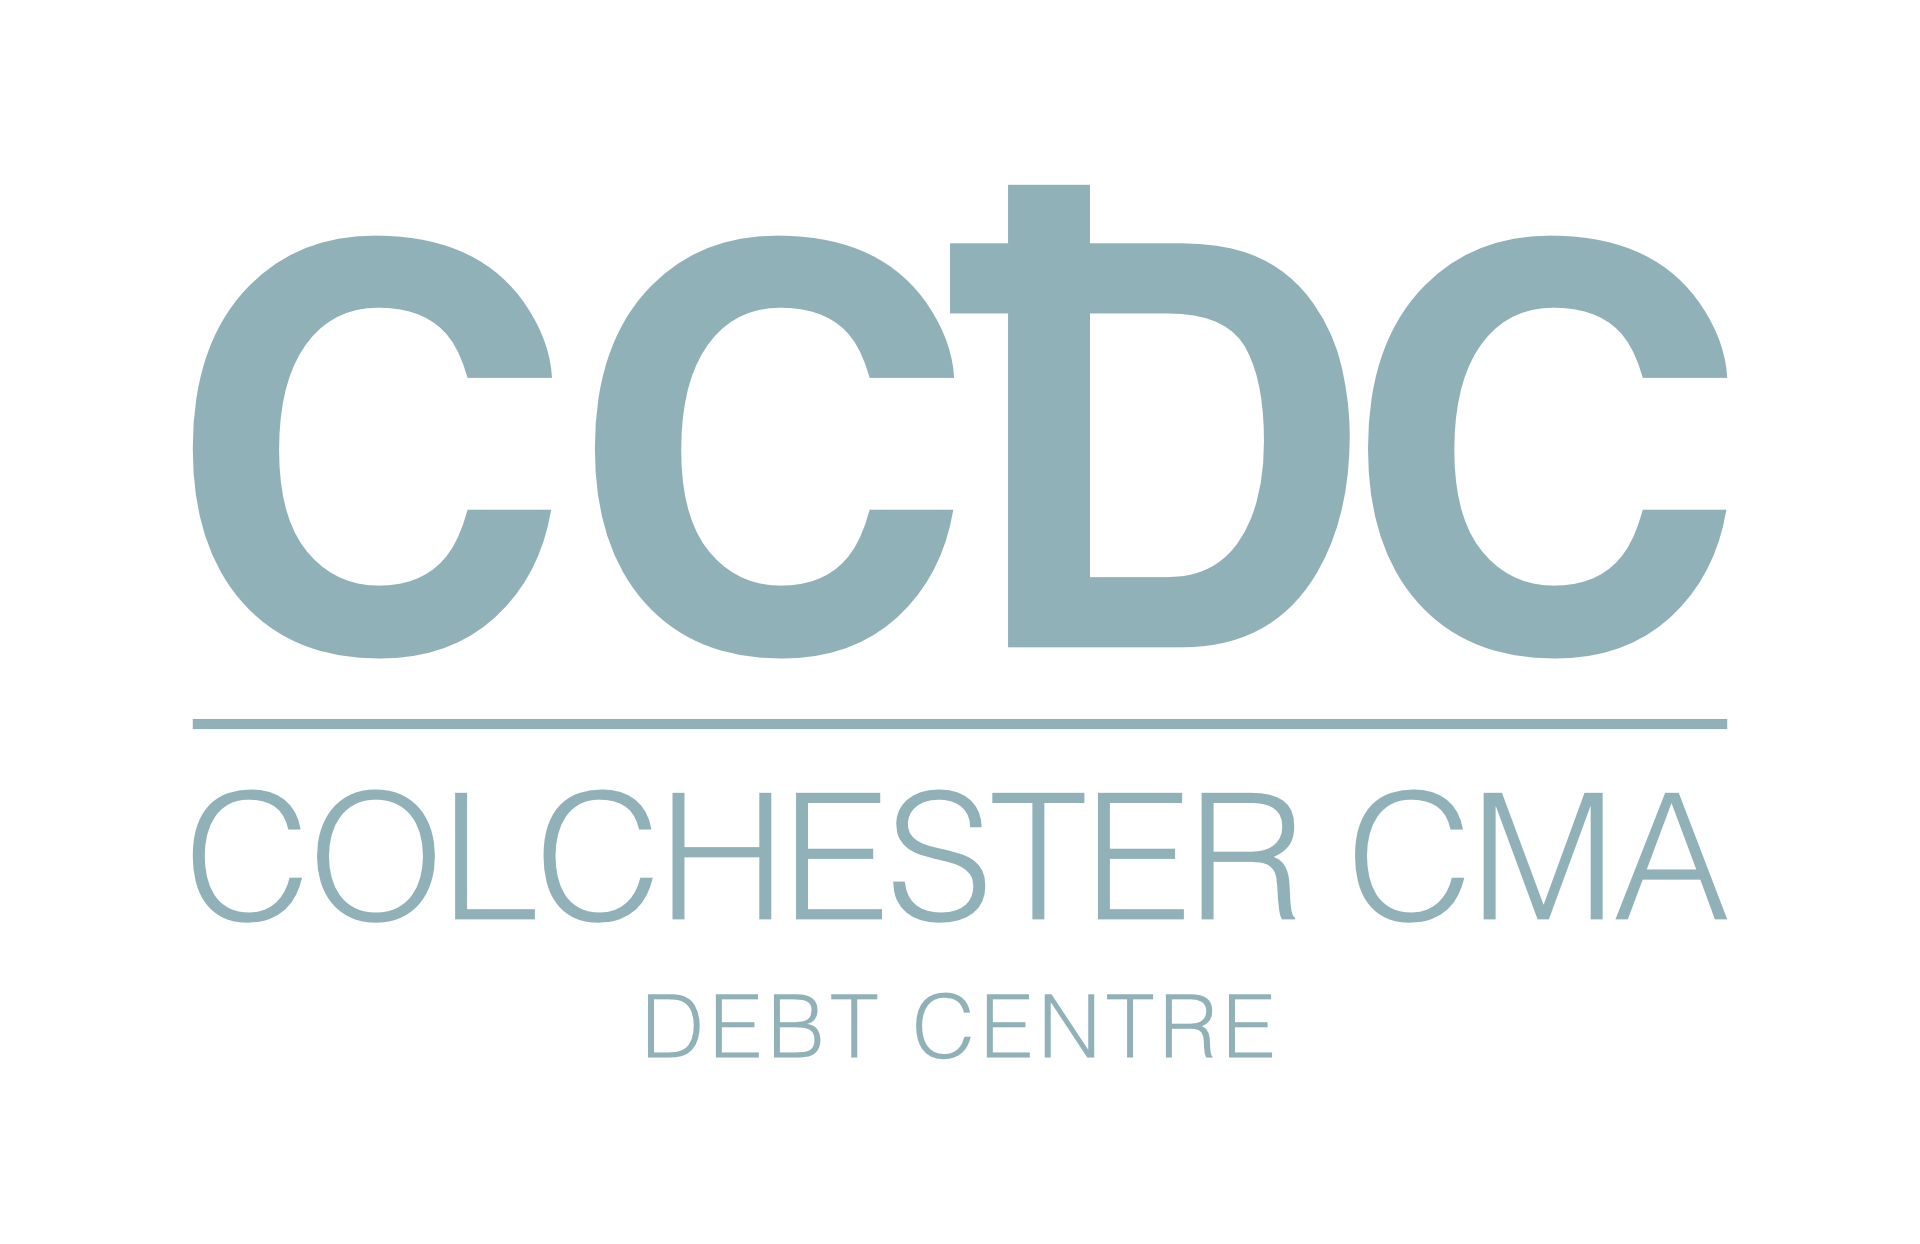 Colchester Debt Centre